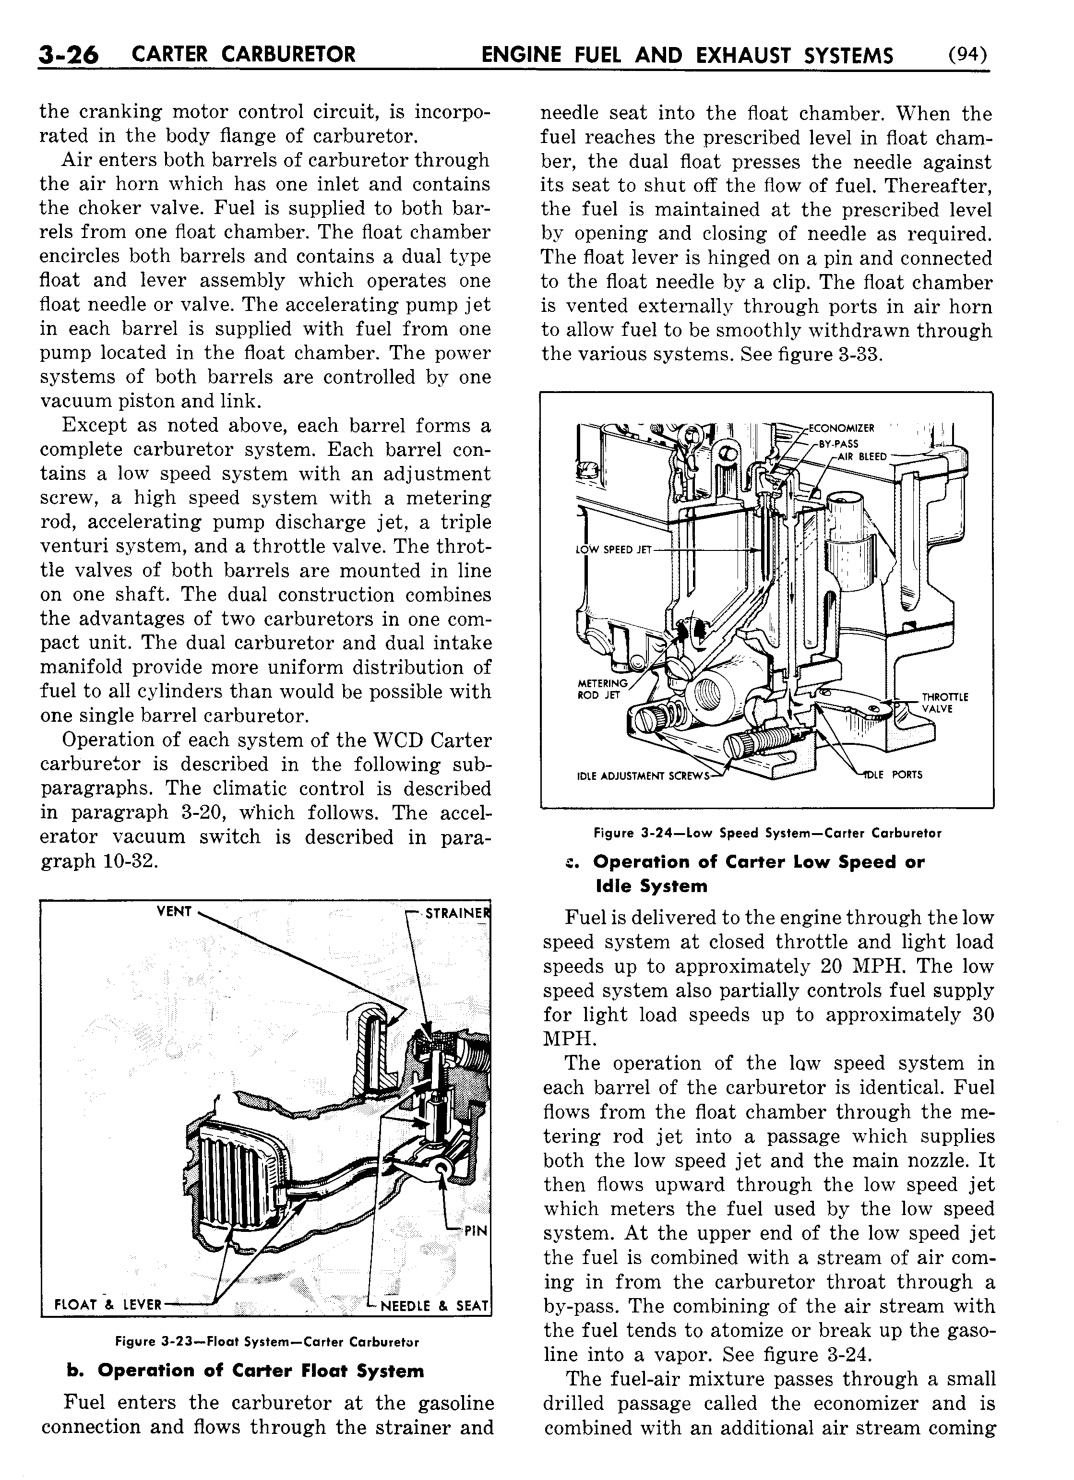 n_04 1951 Buick Shop Manual - Engine Fuel & Exhaust-026-026.jpg